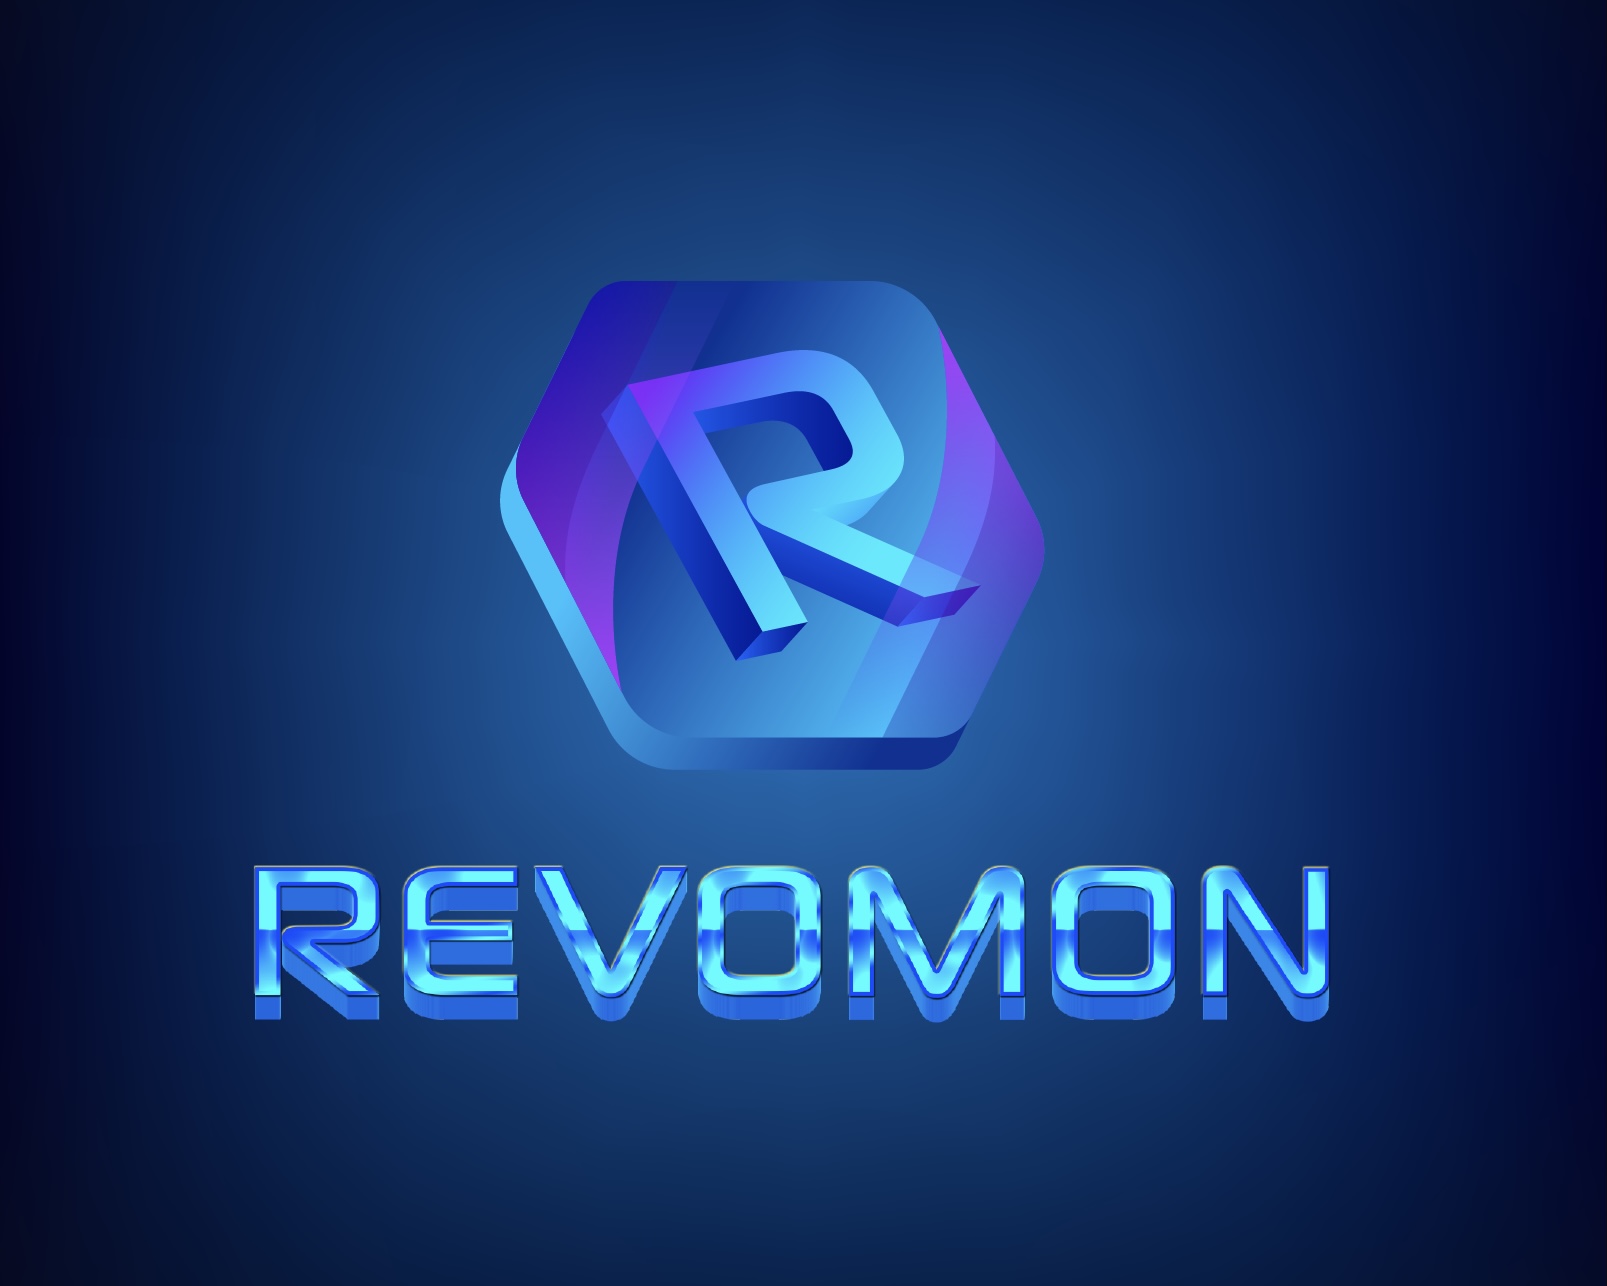 Revomon